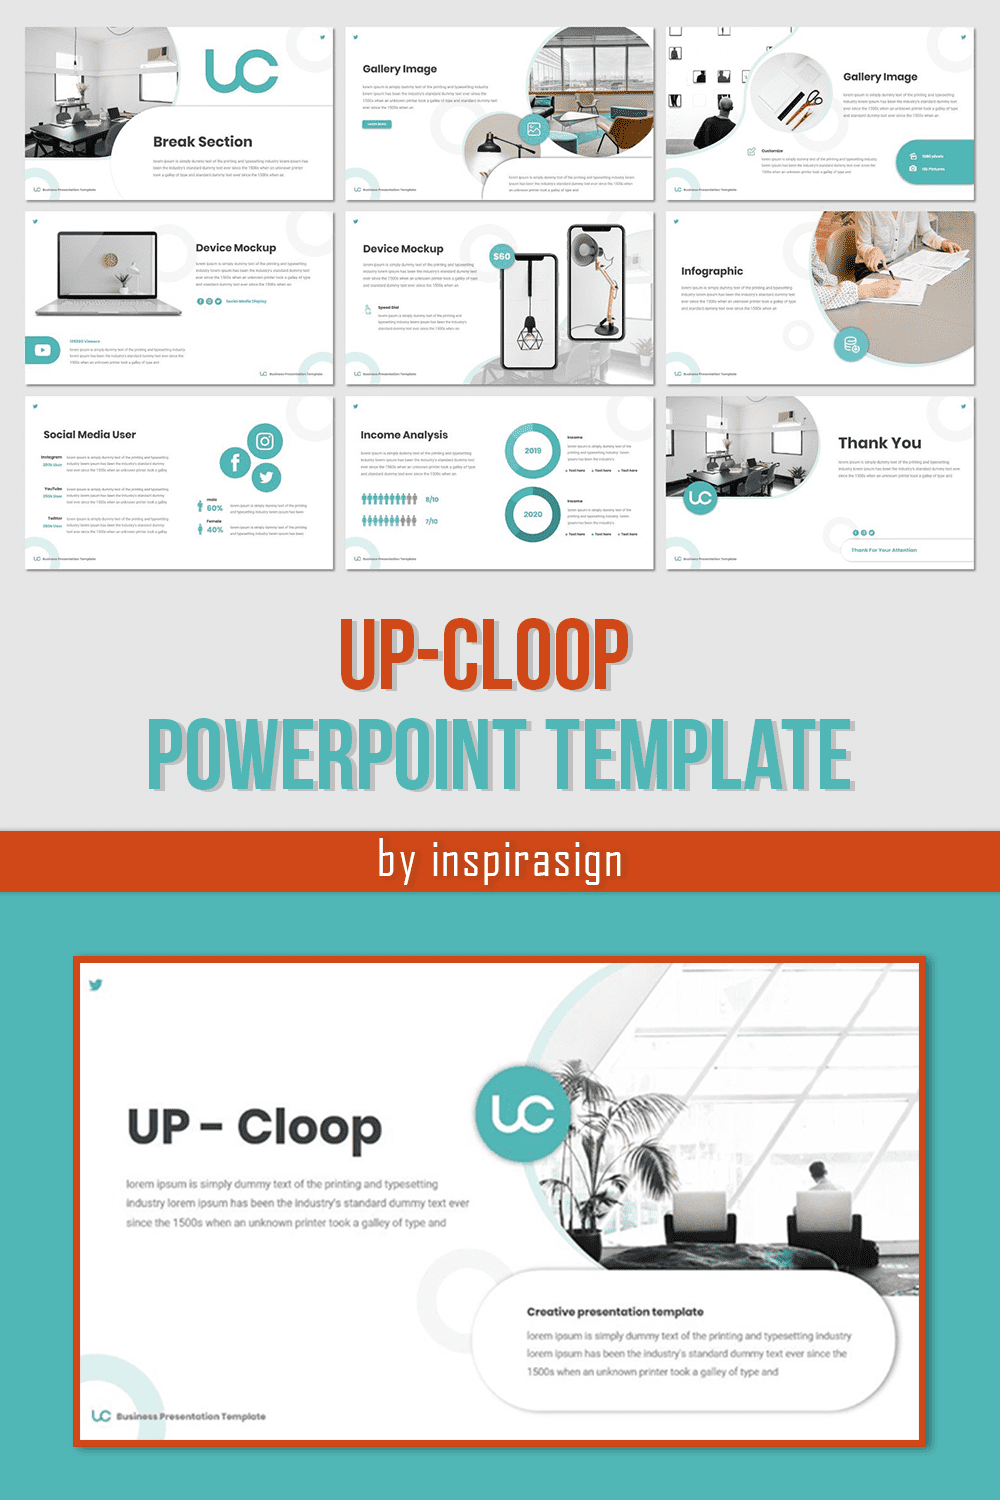 Up-Cloop - PowerPoint Template pinterest image.